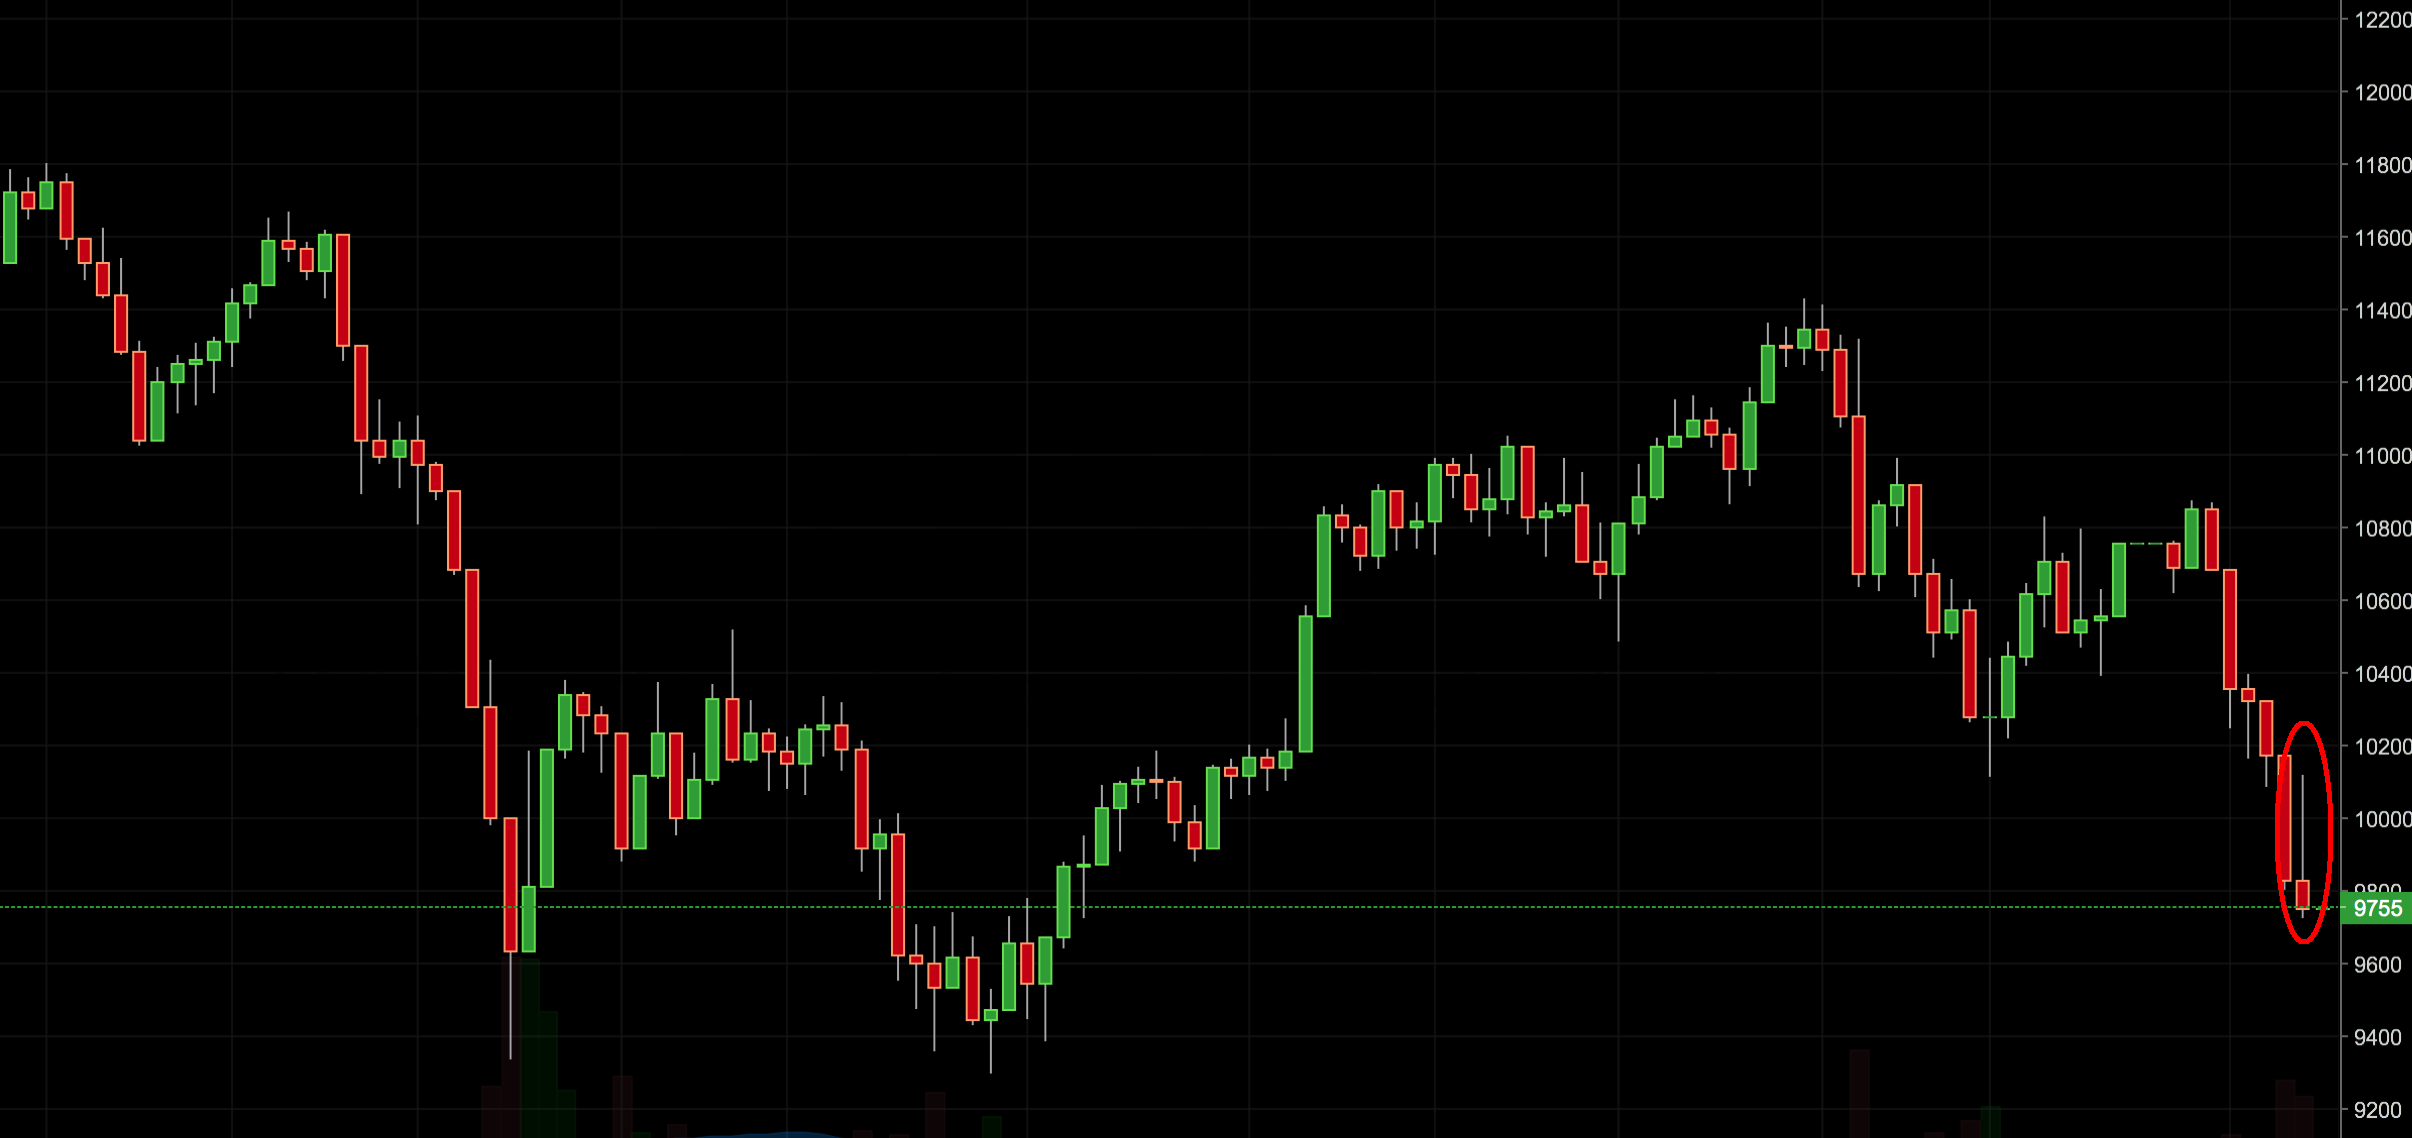 dax trading signal